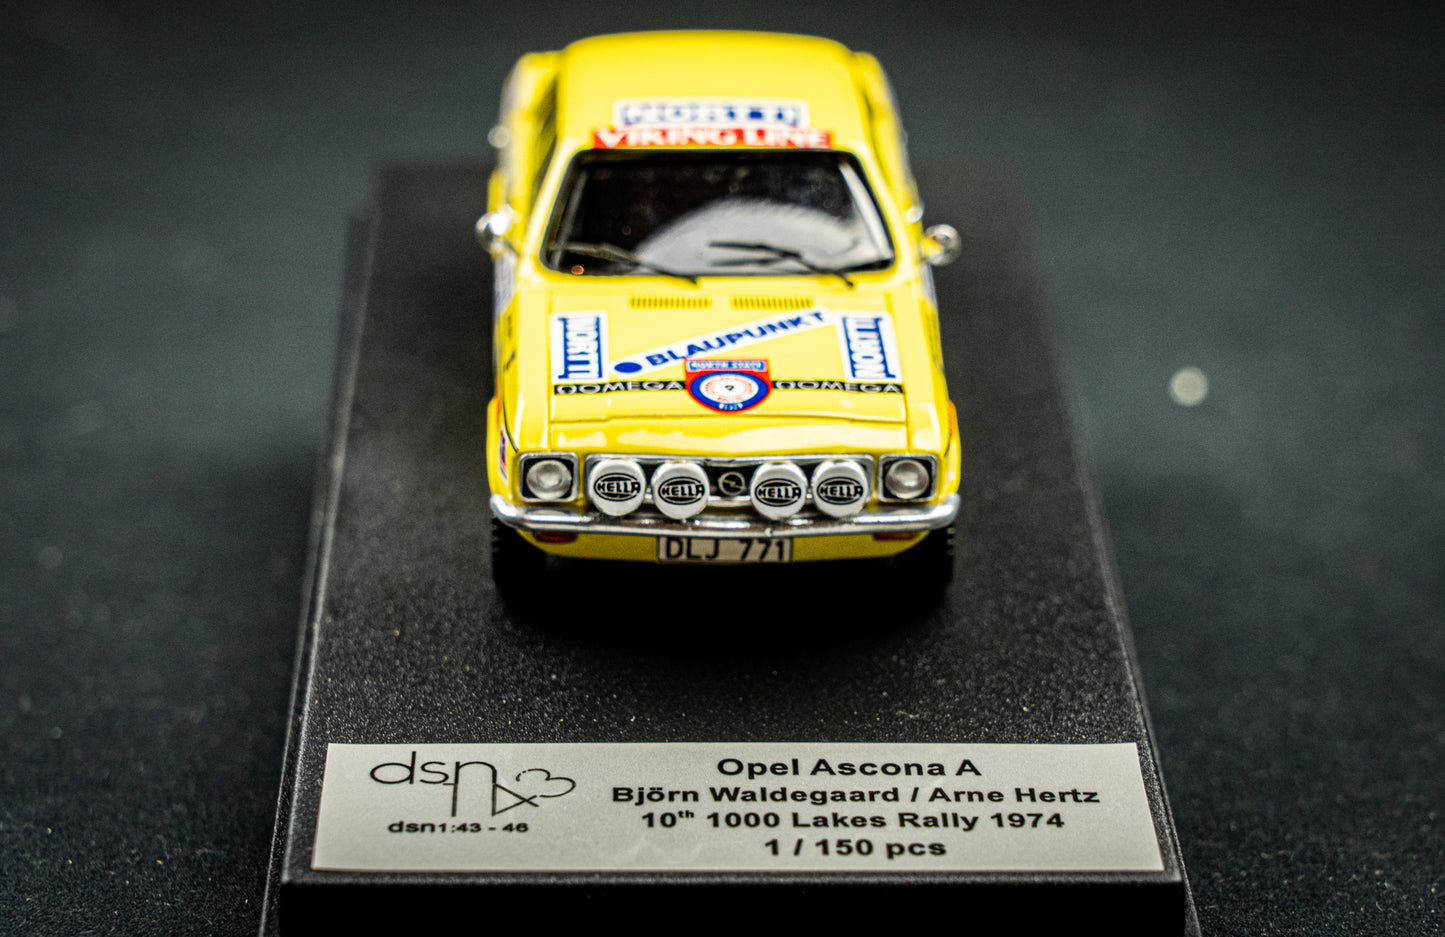 Opel Ascona A - Lim. Edition 1 / 150 #9 B. Waldegaard / A. Hertz - 10th 1000 Lakes Rallye 1974